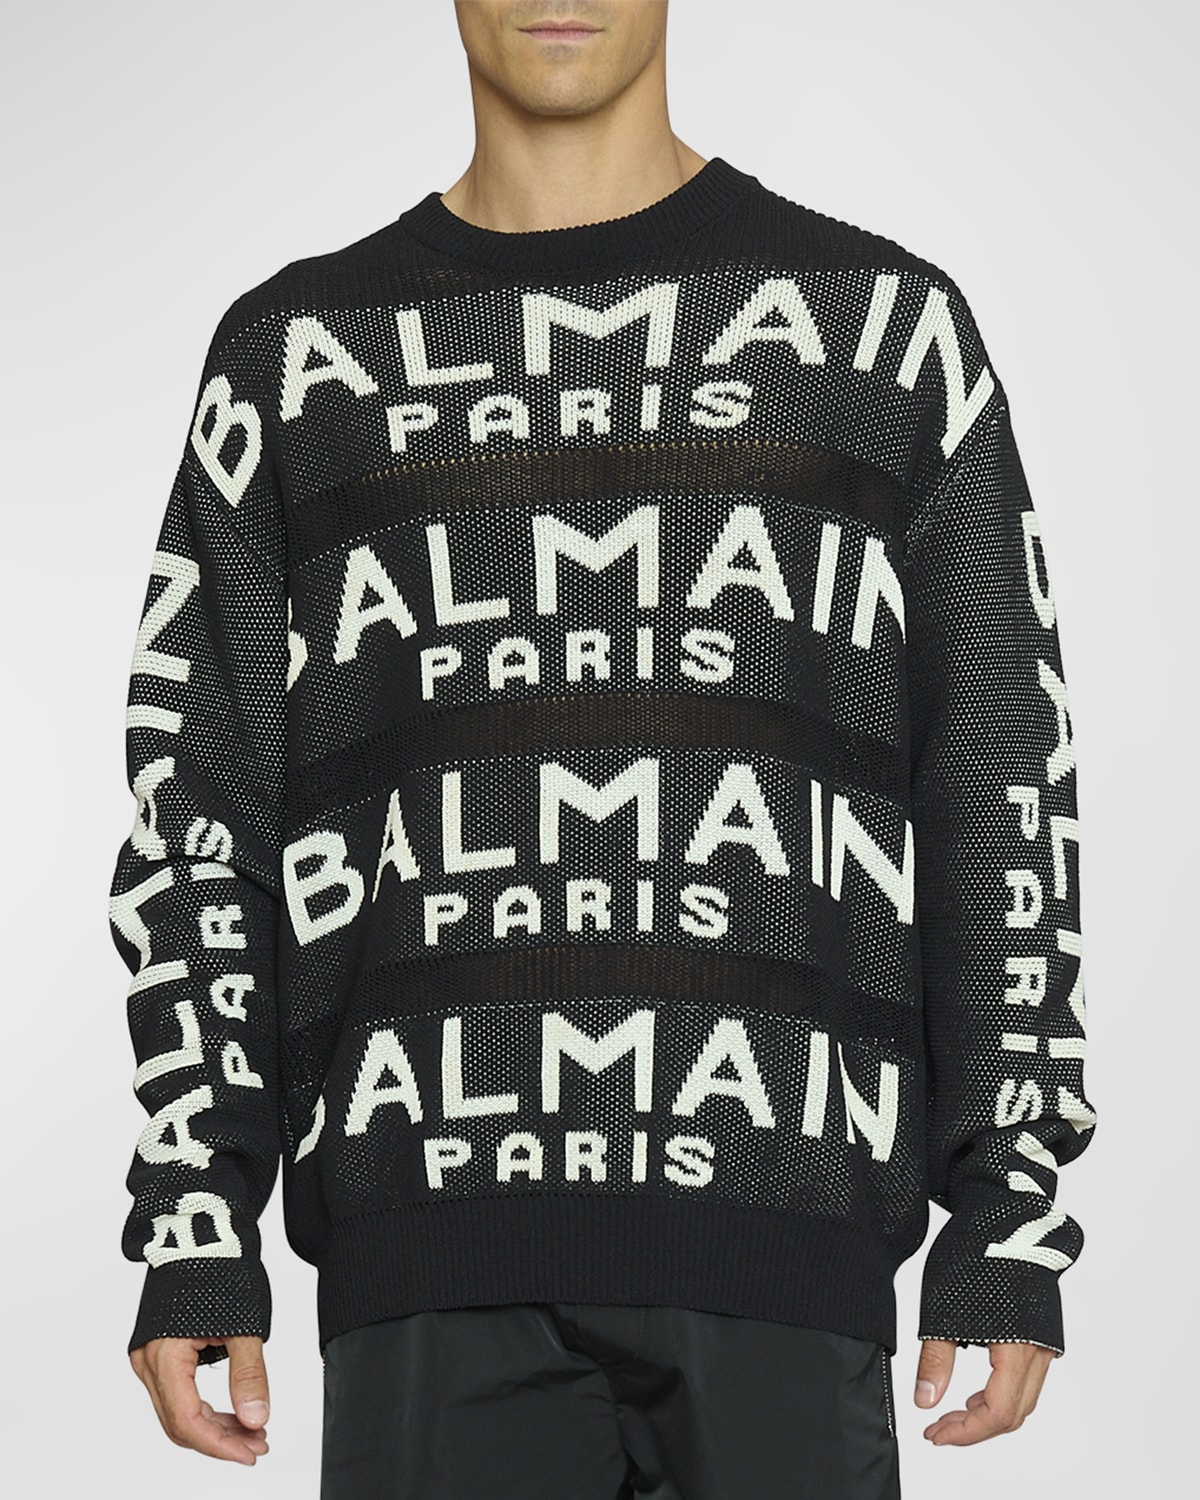 risico Vergelding Verbaasd Balmain Sweater | Neiman Marcus